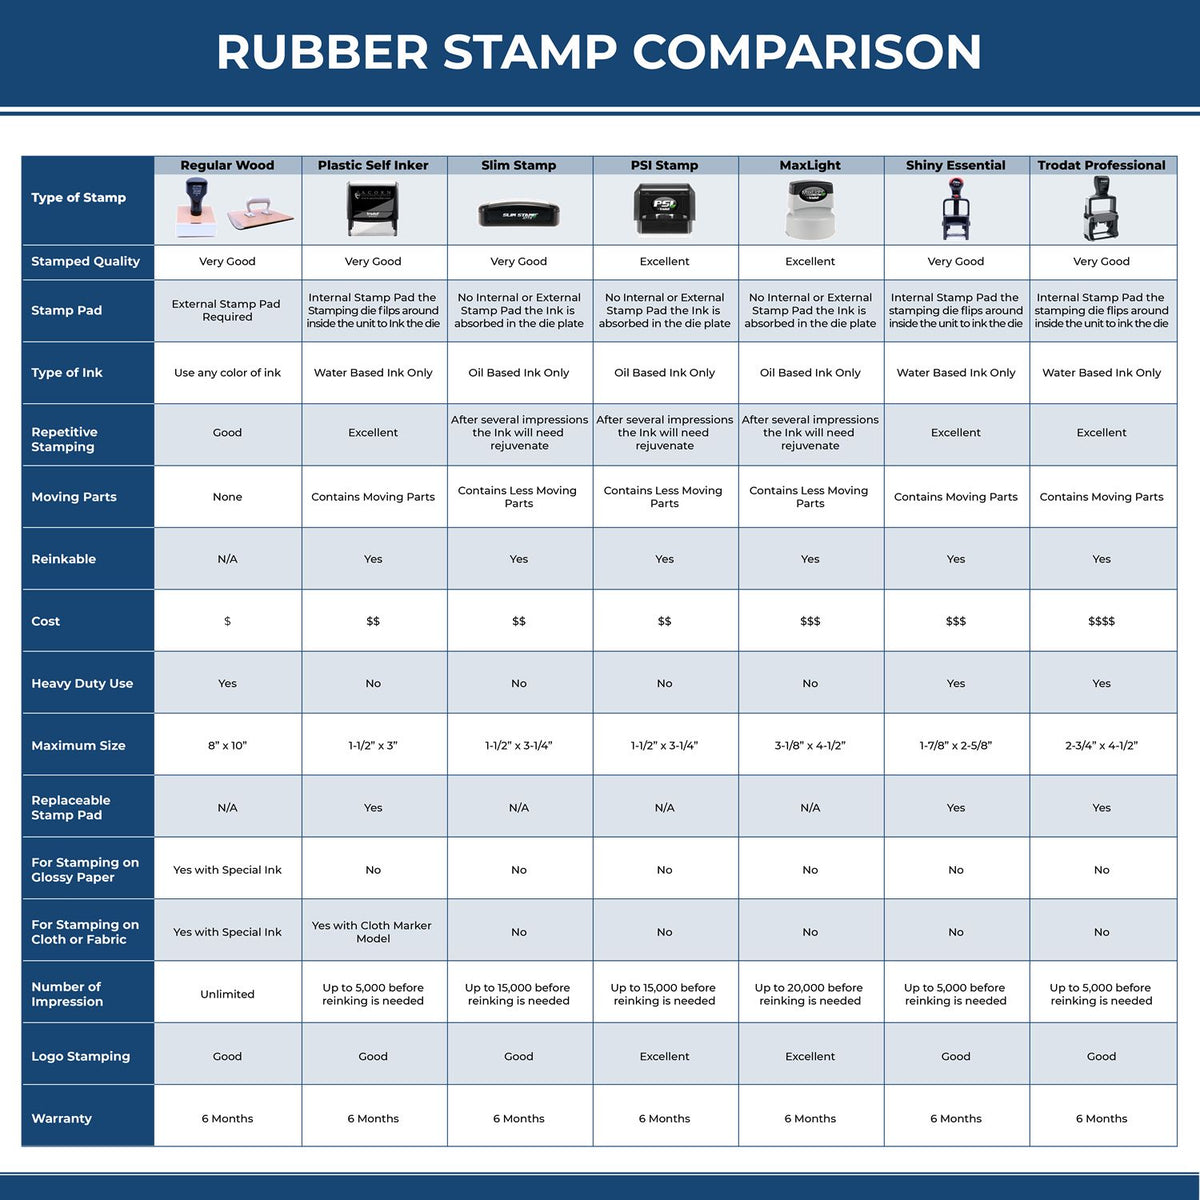 Credit Outline Rubber Stamp 4063R Rubber Stamp Comparison